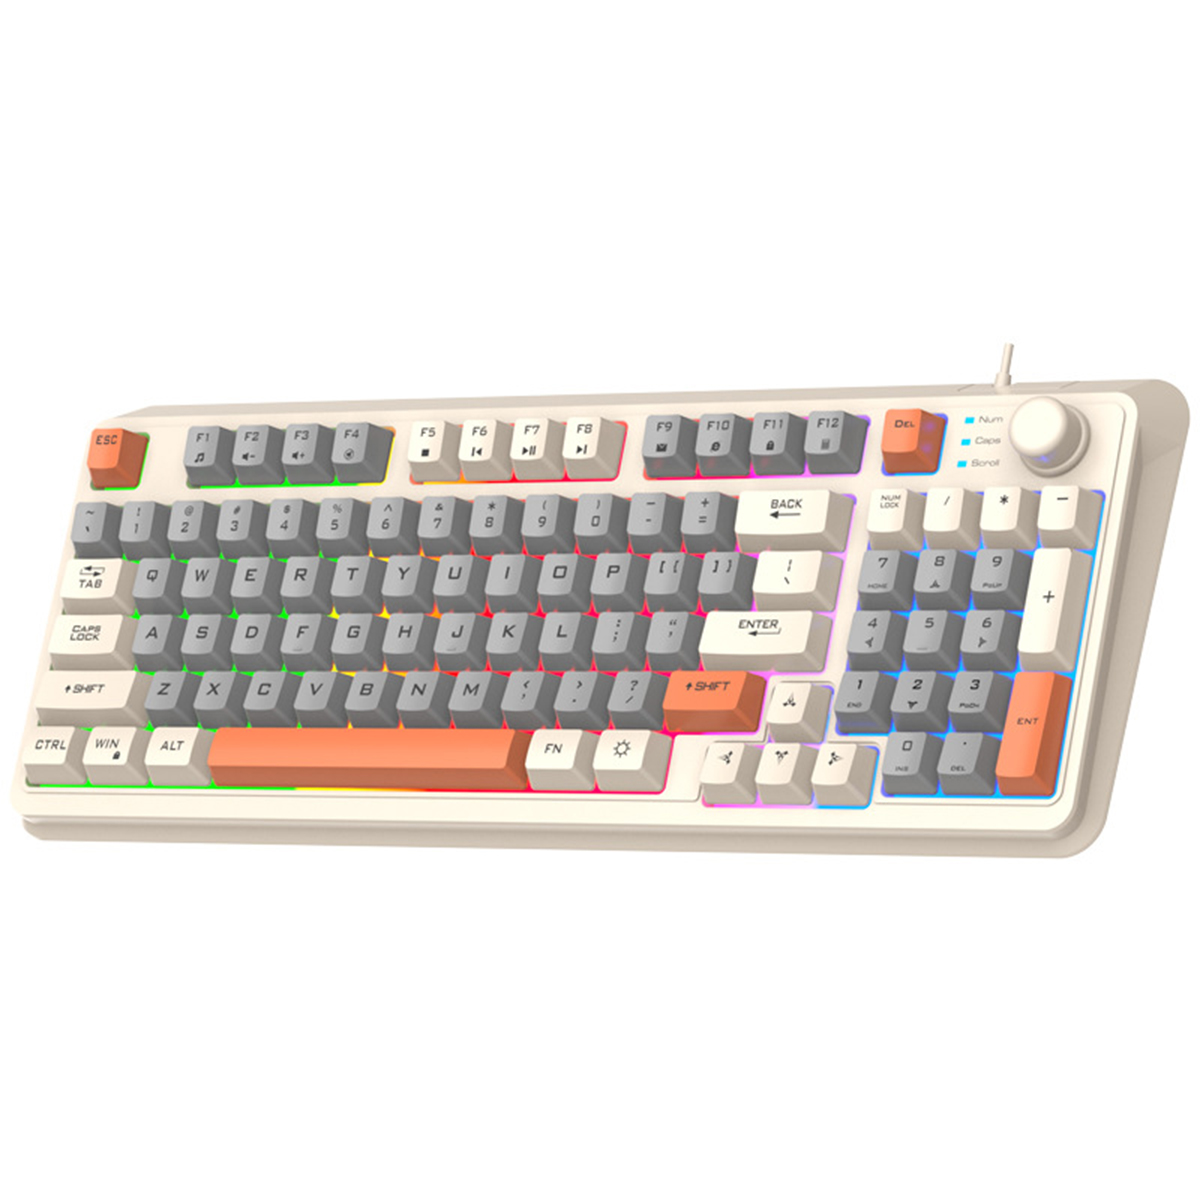 SYNTEK Membrantastatur Mechanical Lautstärkeregelung, Colour Mechanische Patchwork Schnelle Feel Tastatur, Backlit Tastatur Triple